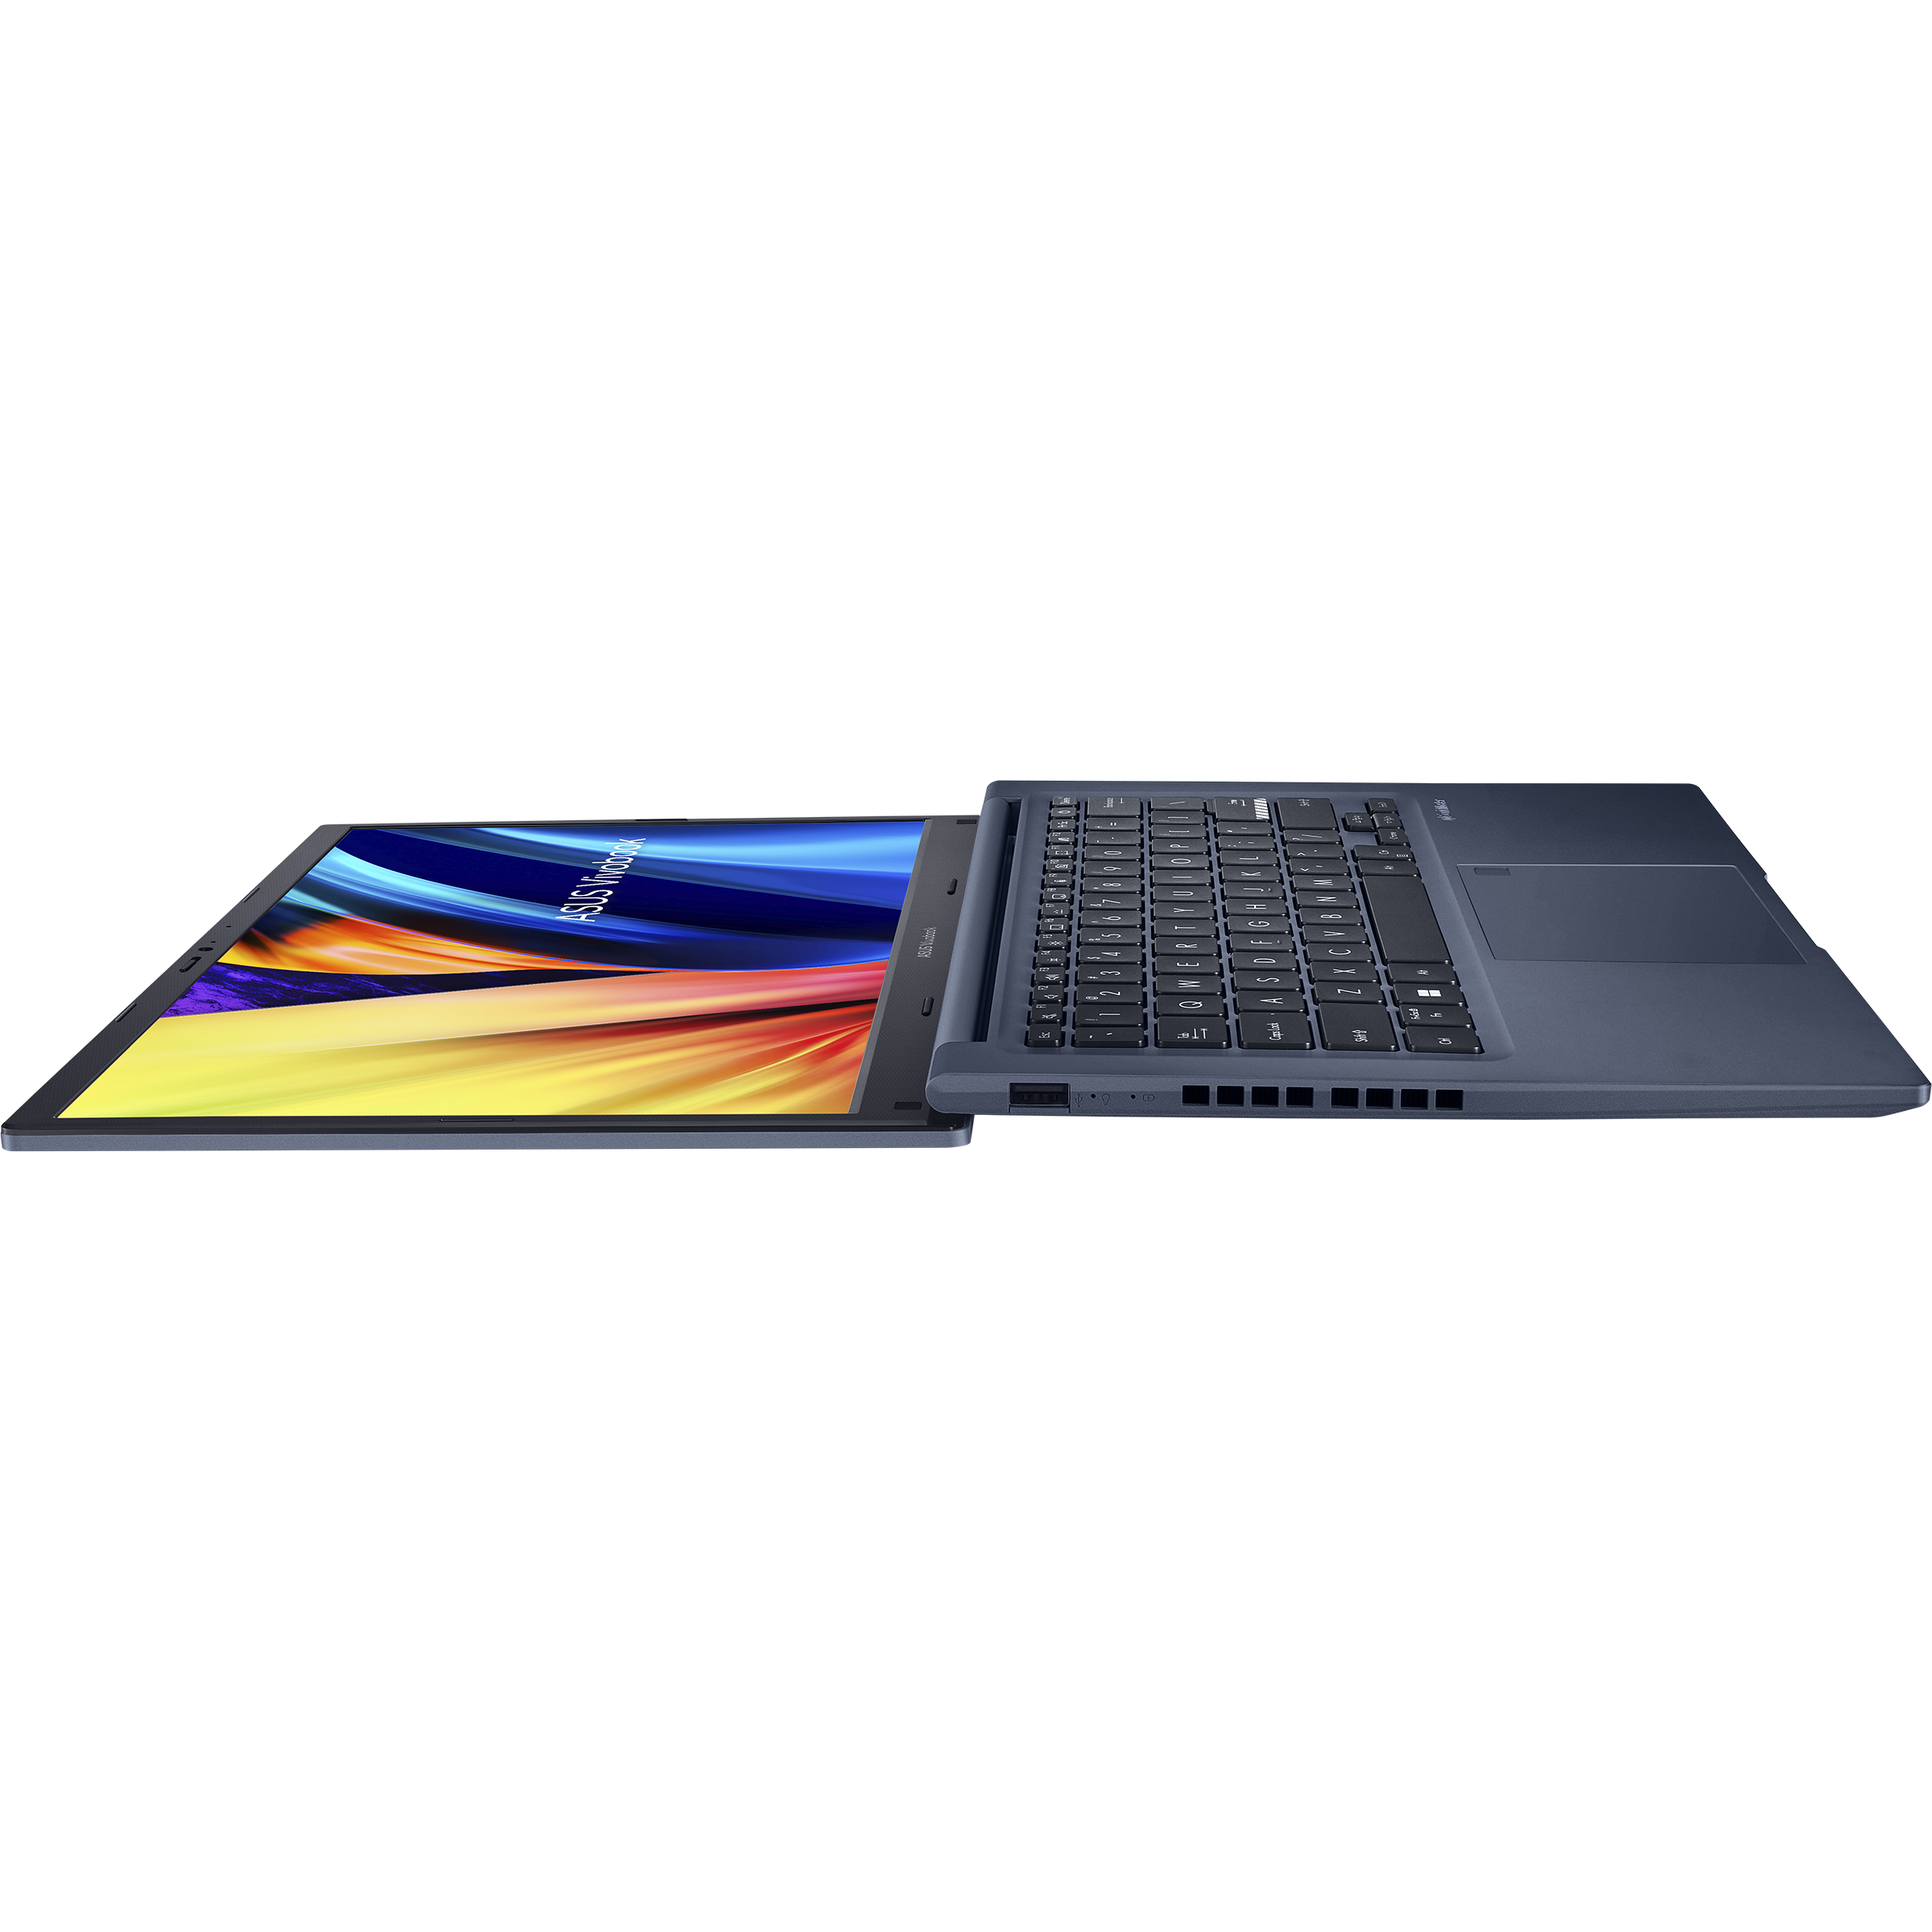 Laptop ASUS Vivobook 14: Procesador AMD Ryzen 7 5700U (hasta 4.3 GHz),  Memoria de 8GB DDR4, SSD de 512GB, Pantalla de 14 LED, Video Radeon  Graphics, S.O. Windows 11 Home (64 Bits).